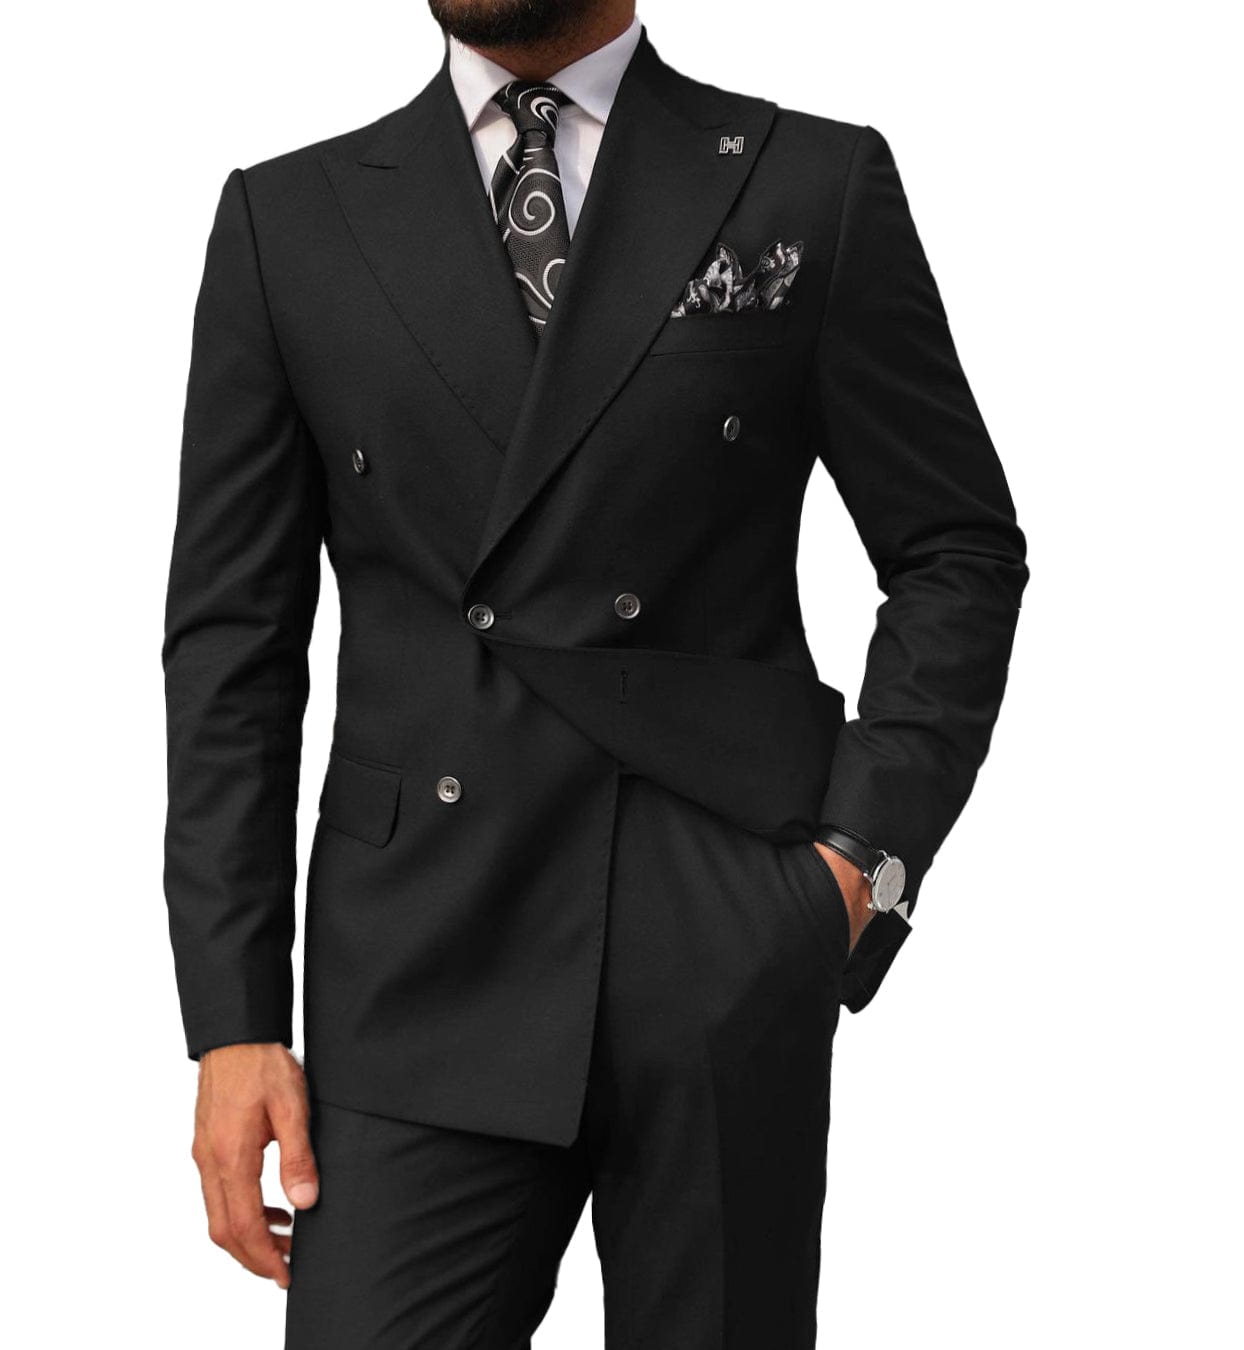 ceehuteey Mens 2 Pieces Suit Slim Fit Business Double Breasted Peak Lapel Tuxedos (Blazer+Pants)